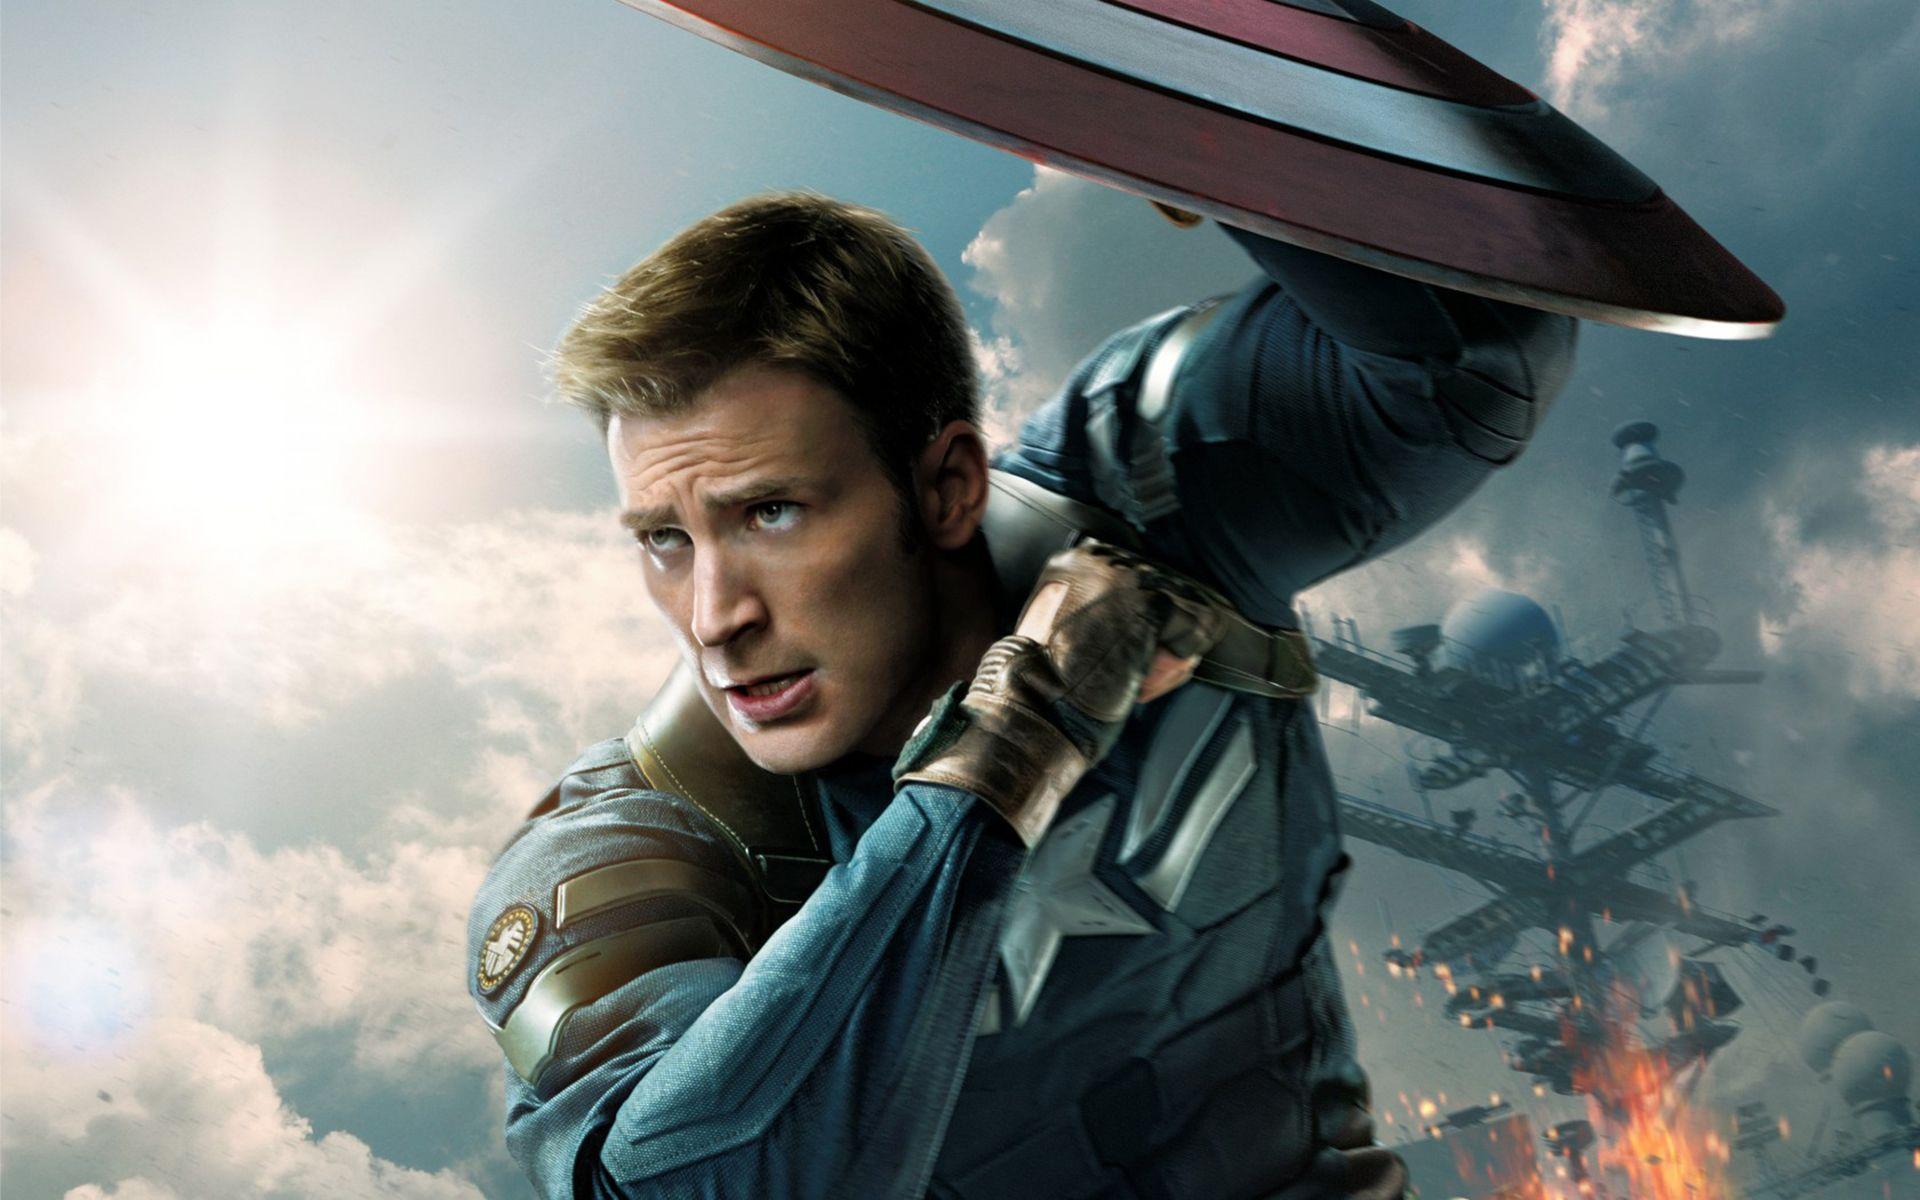 Chris Evans as Steve Rogers, Captain America The Winter Soldier